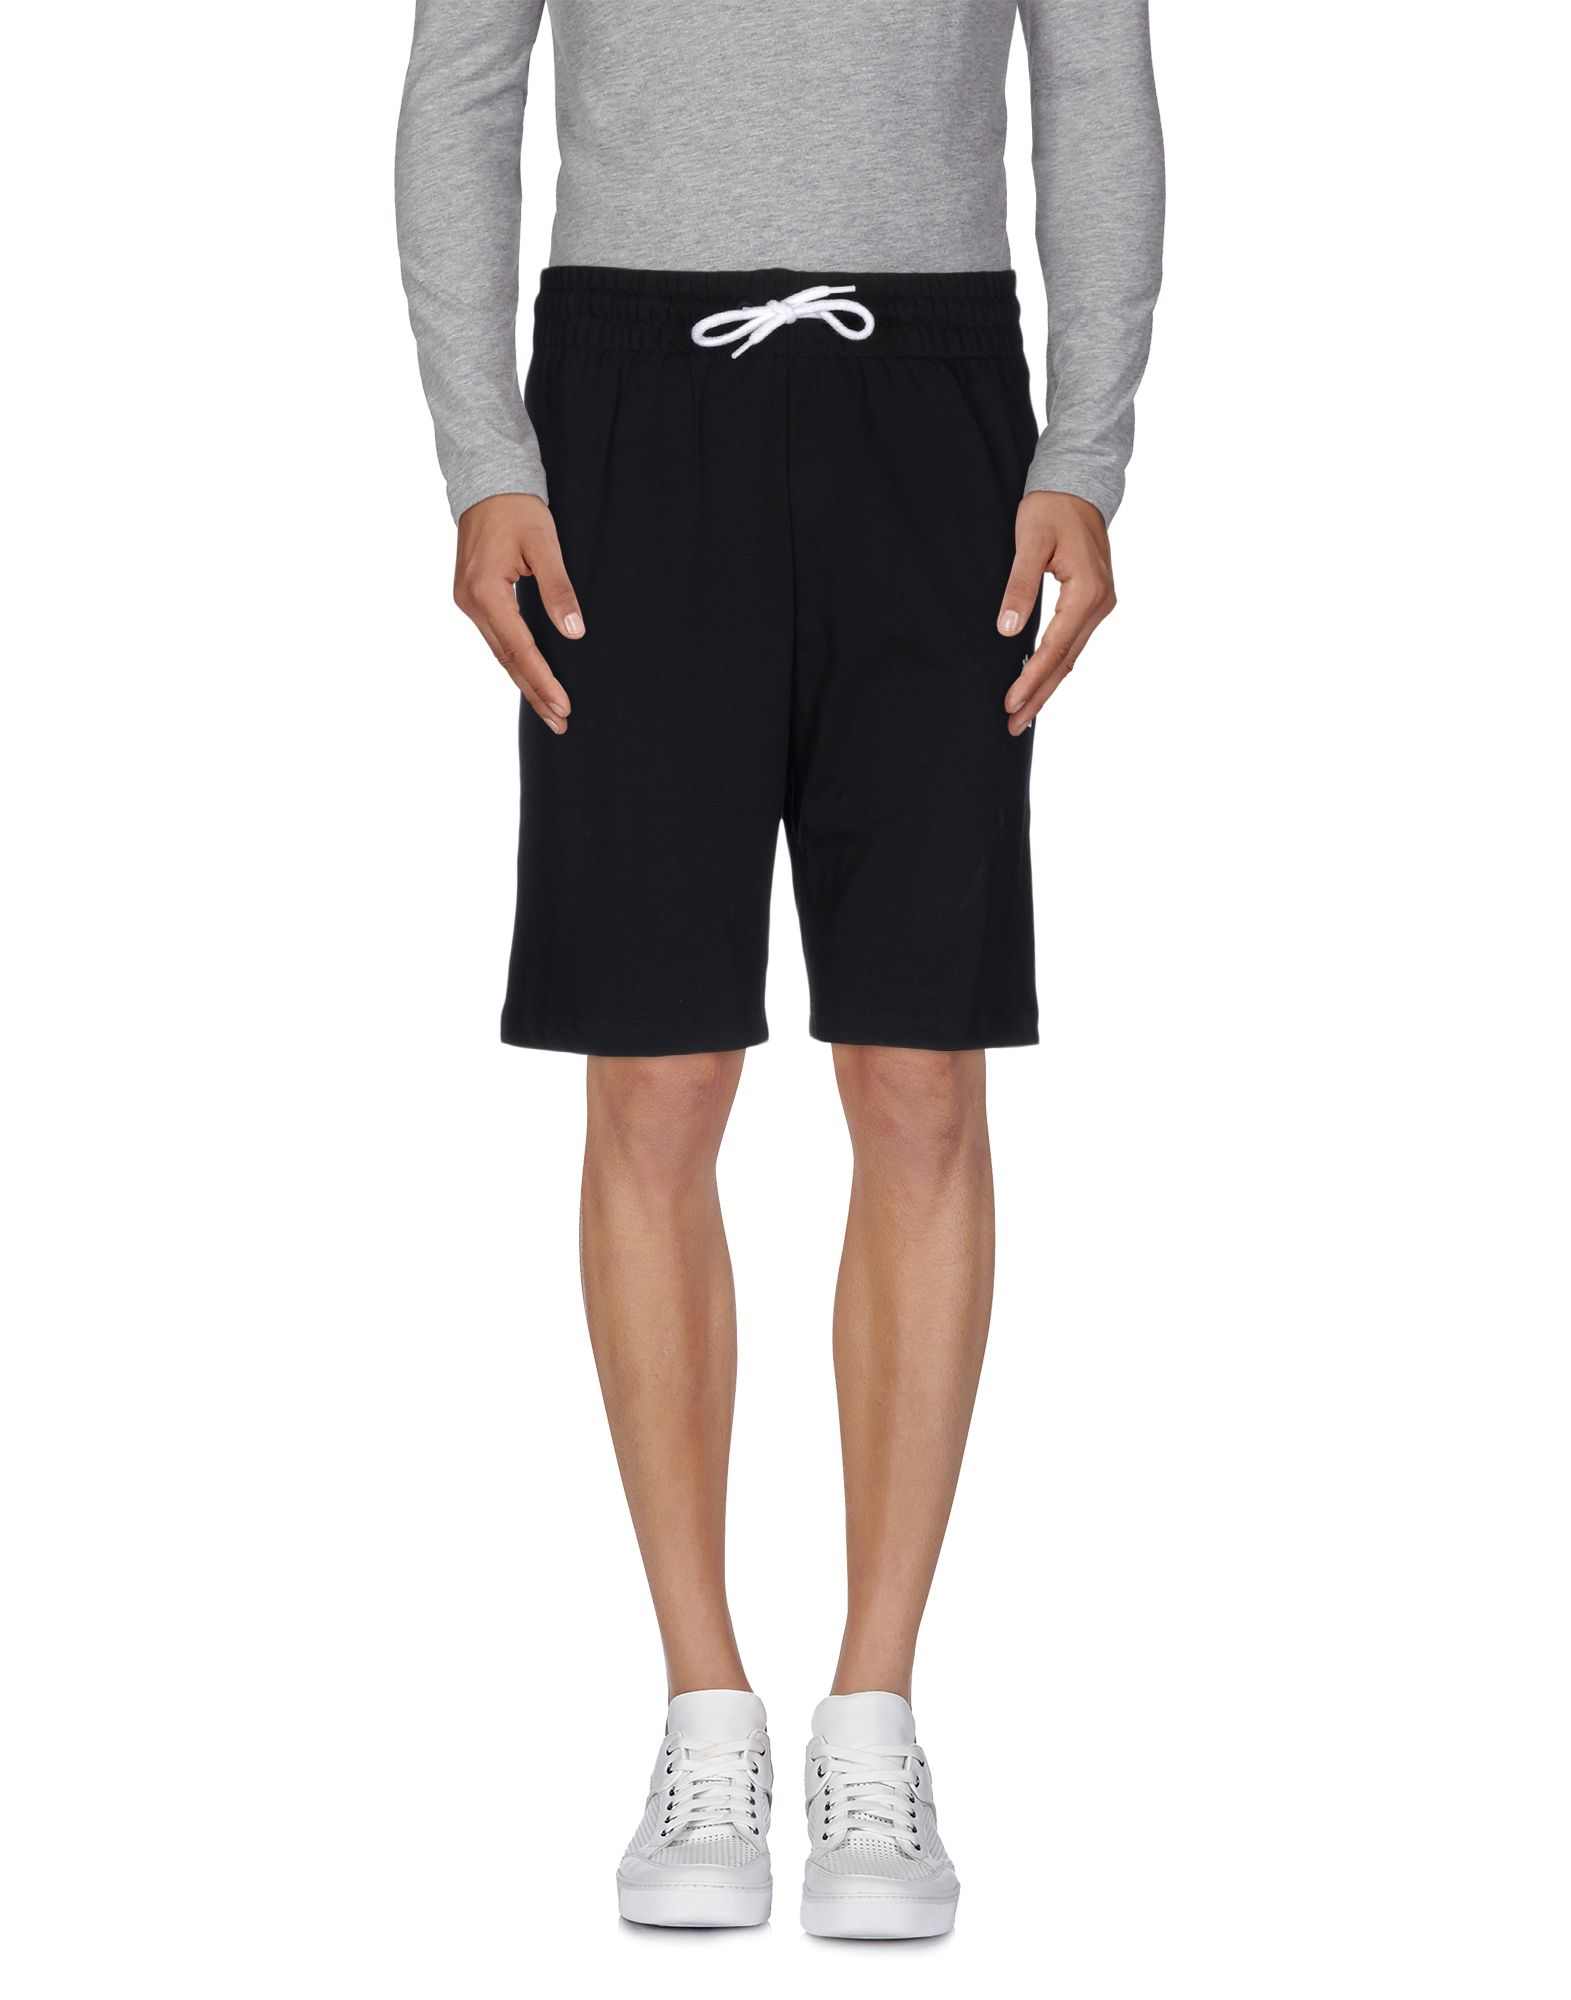 Lyst - Le Coq Sportif Bermuda Shorts in Black for Men